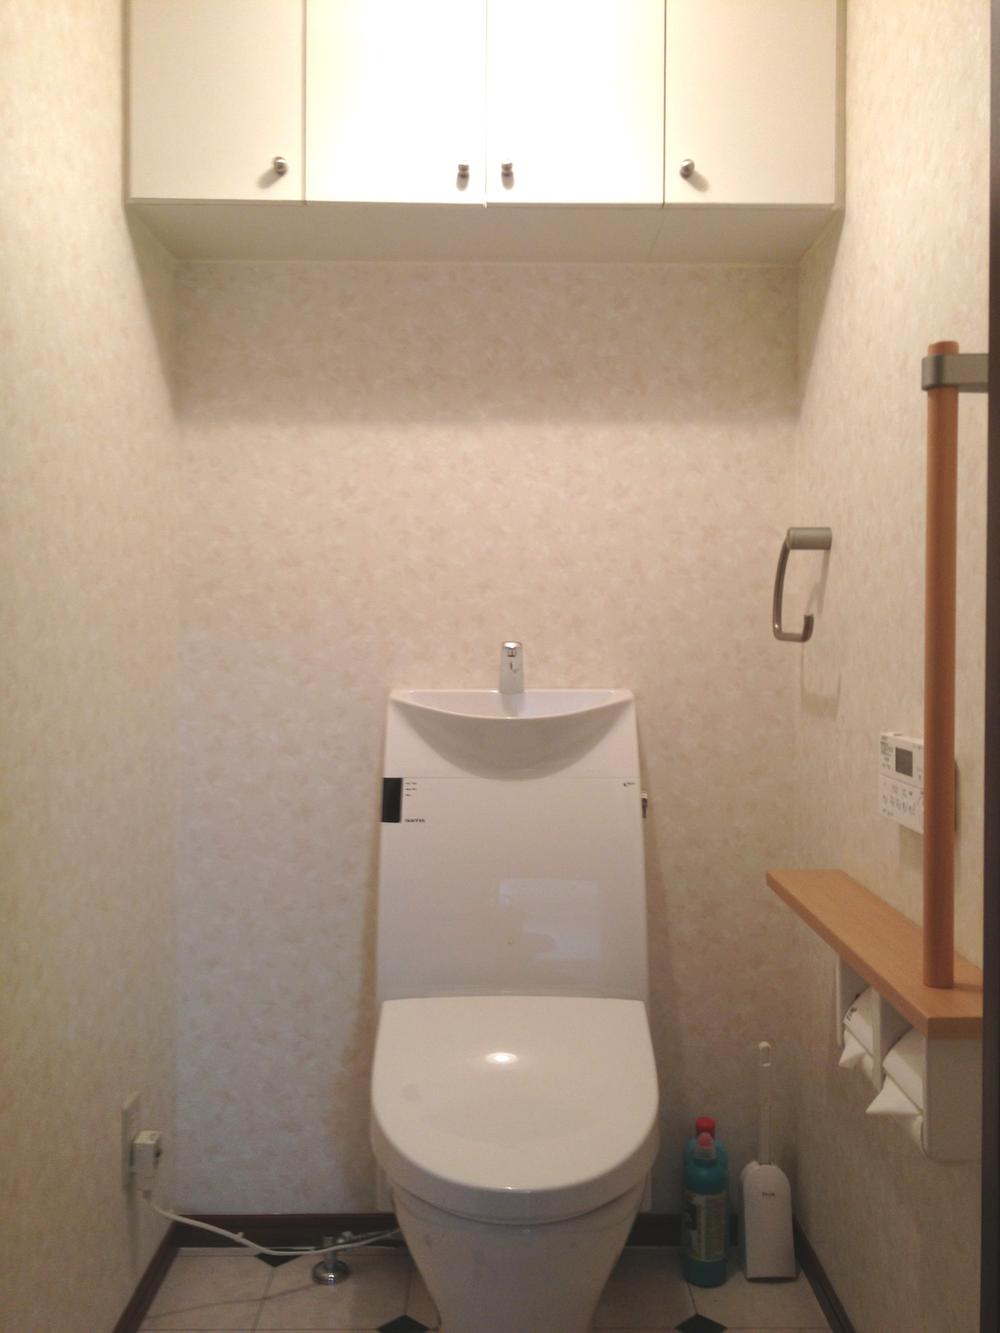 Toilet. Replacement toilet new